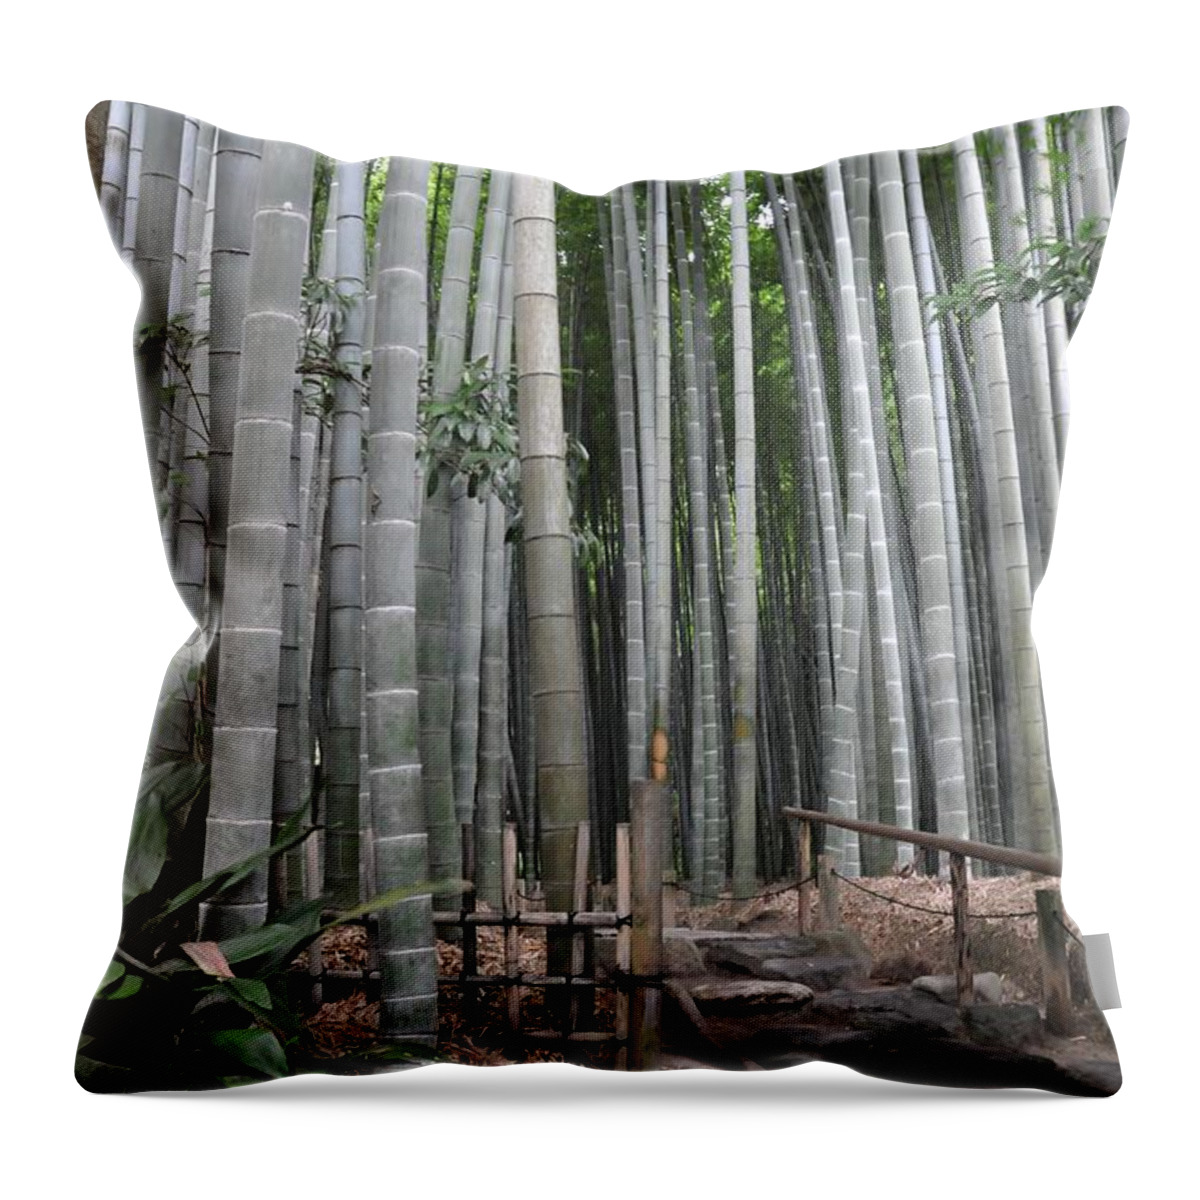 Tranquility Throw Pillow featuring the photograph Bamboo Grove by Masakazu Ejiri